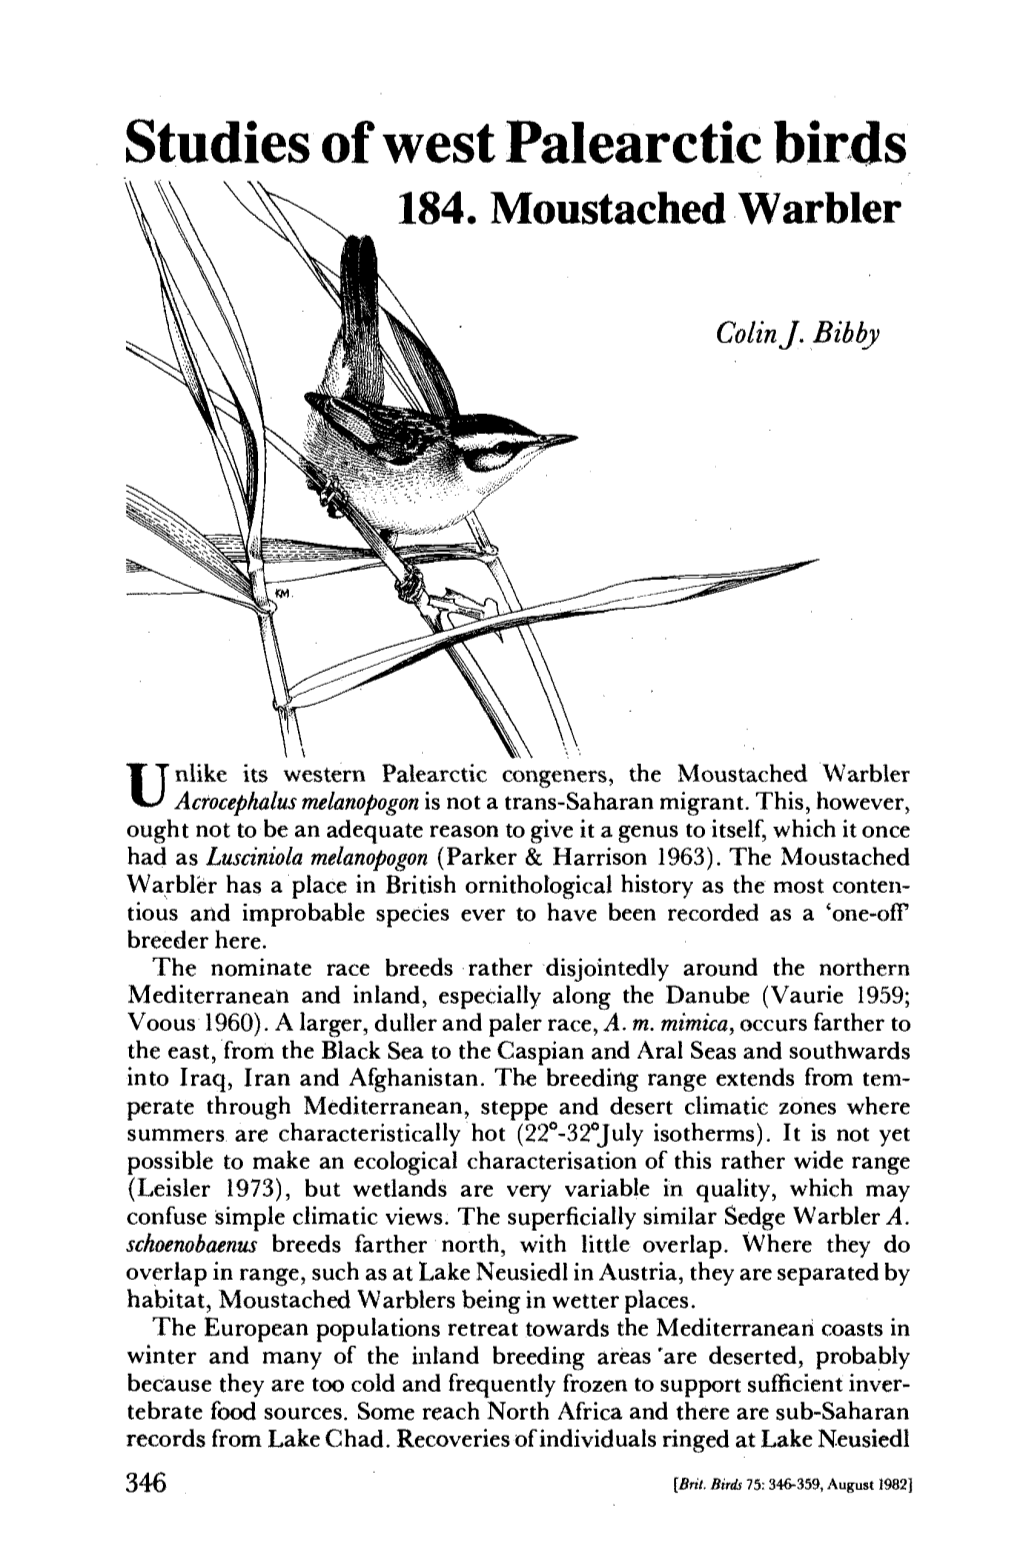 Studies of West Palearctic Birds 184